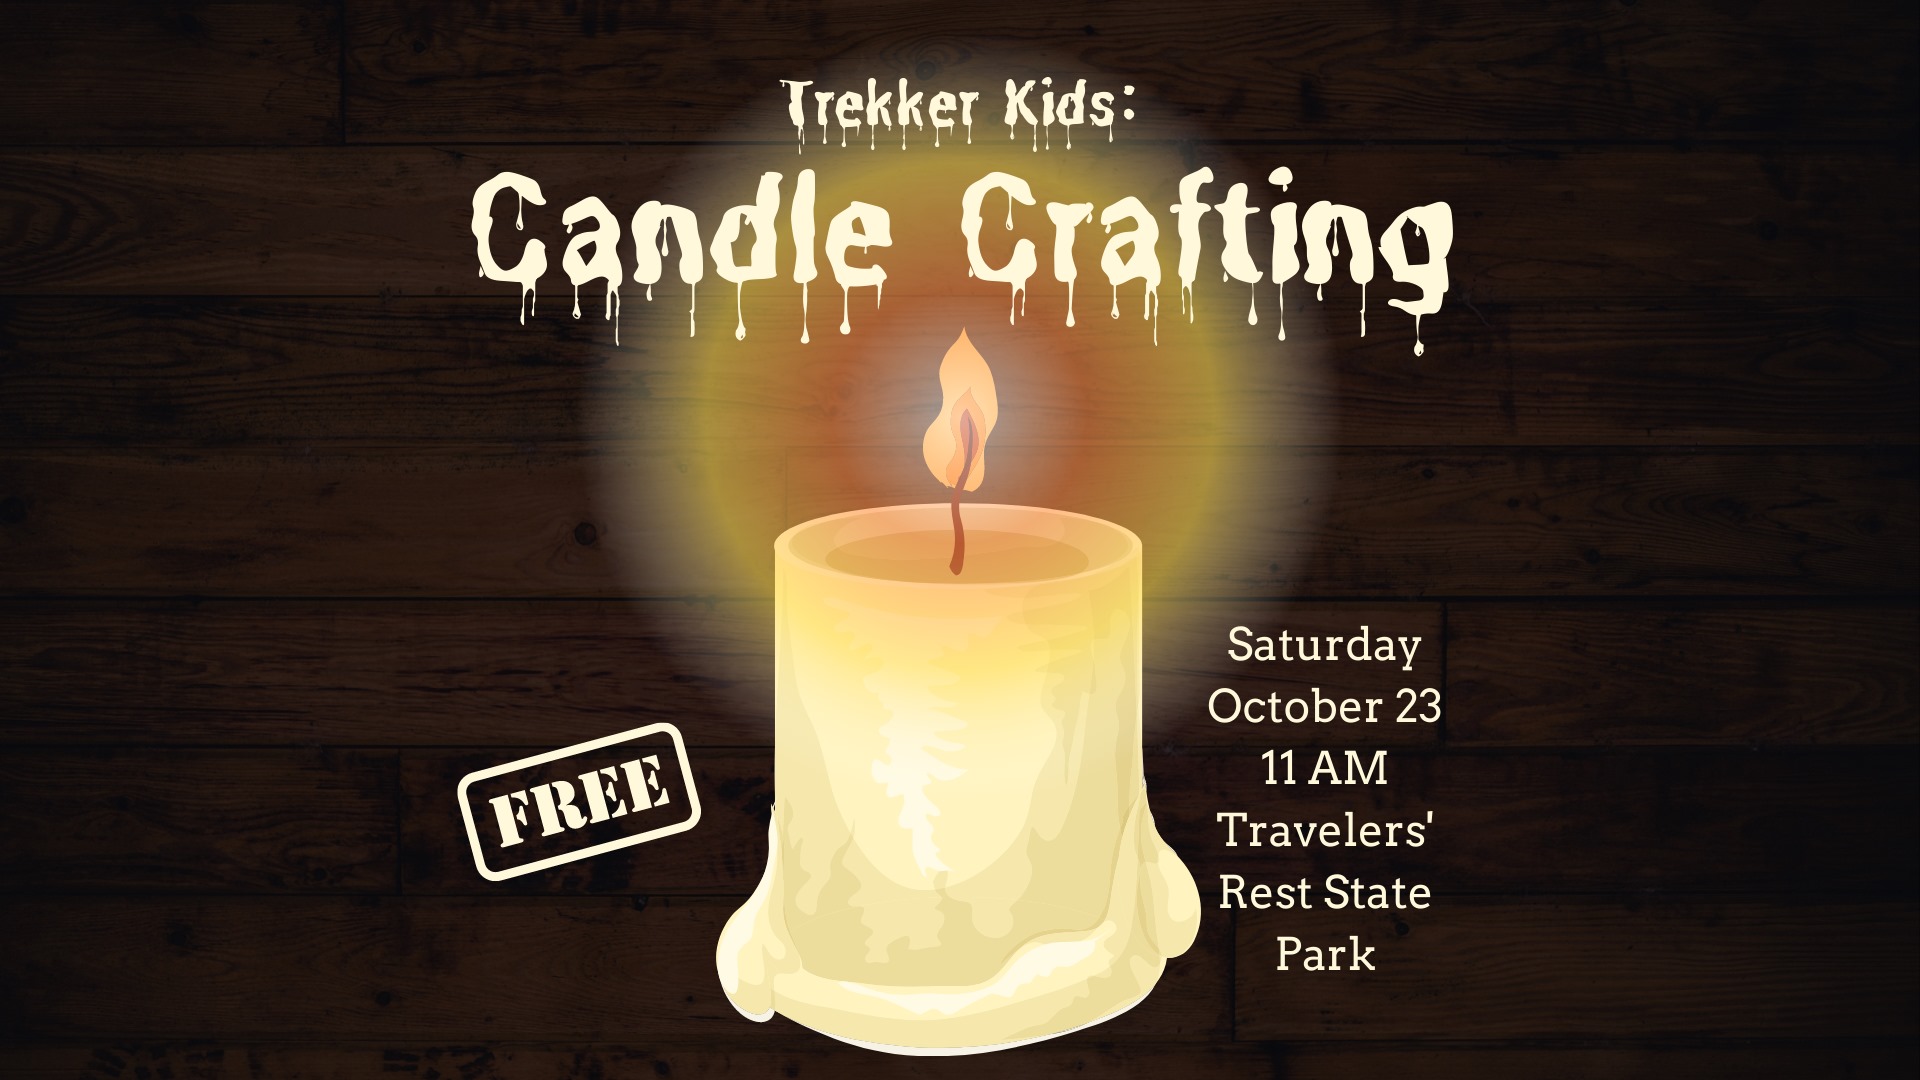 Trekker Kids: Candle Crafting